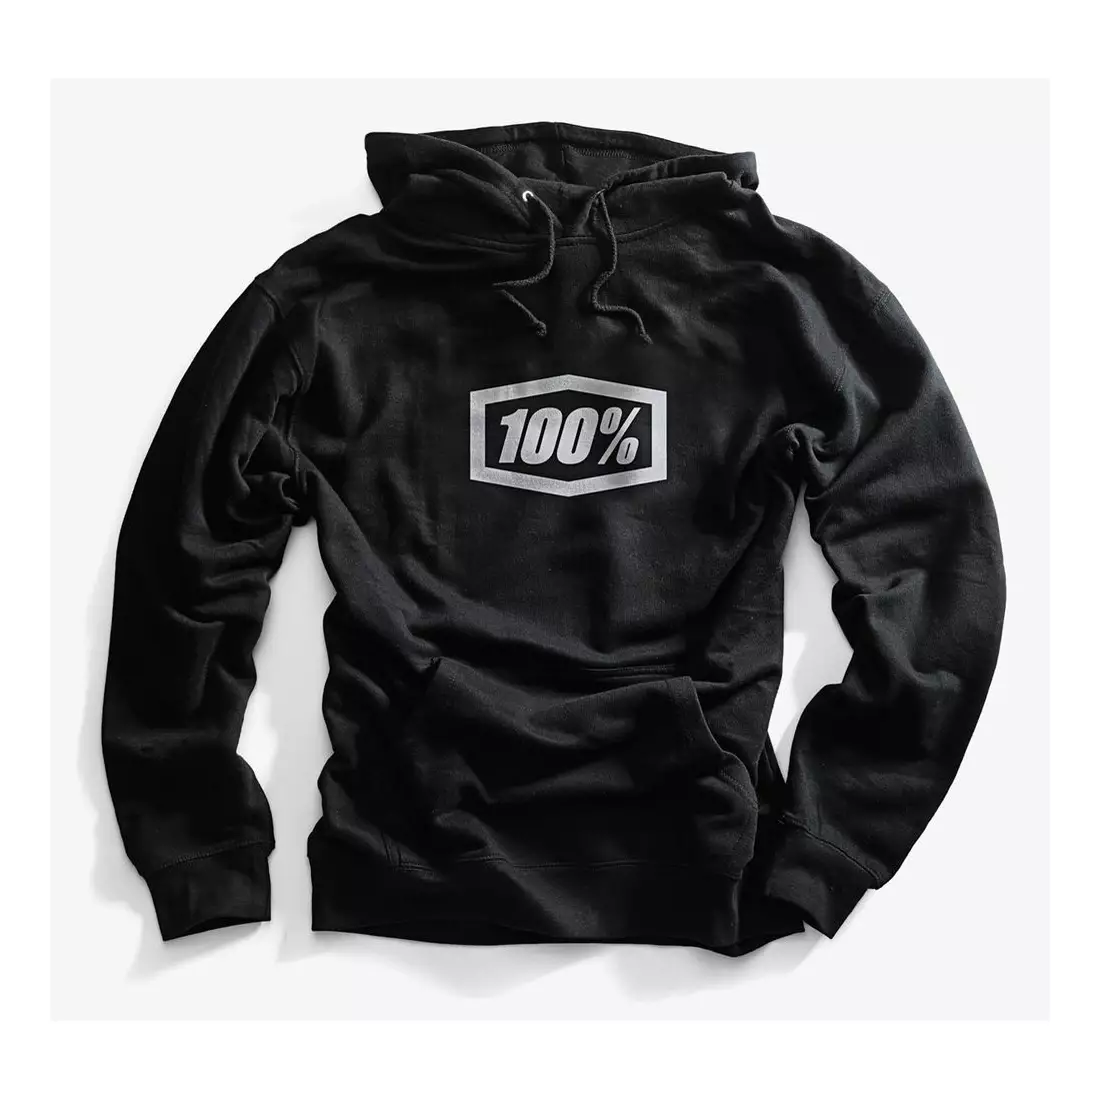 100% men's sports sweatshirt essential hooded pullover black STO-36007-001-10